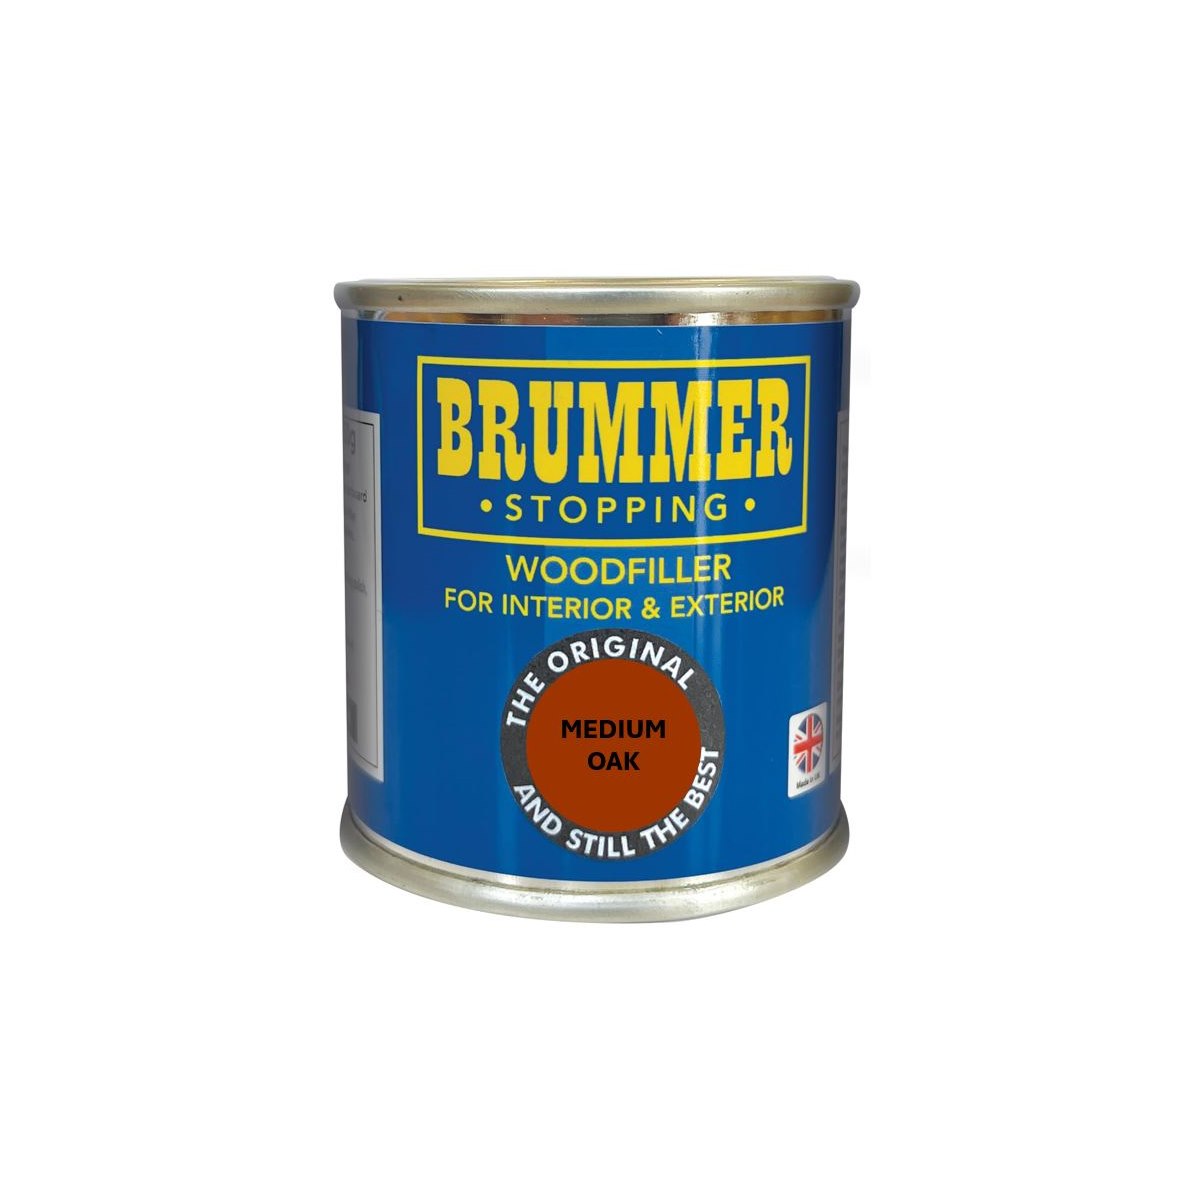 Brummer Woodfiller for Interior and Exteior Use Medium Oak 700g